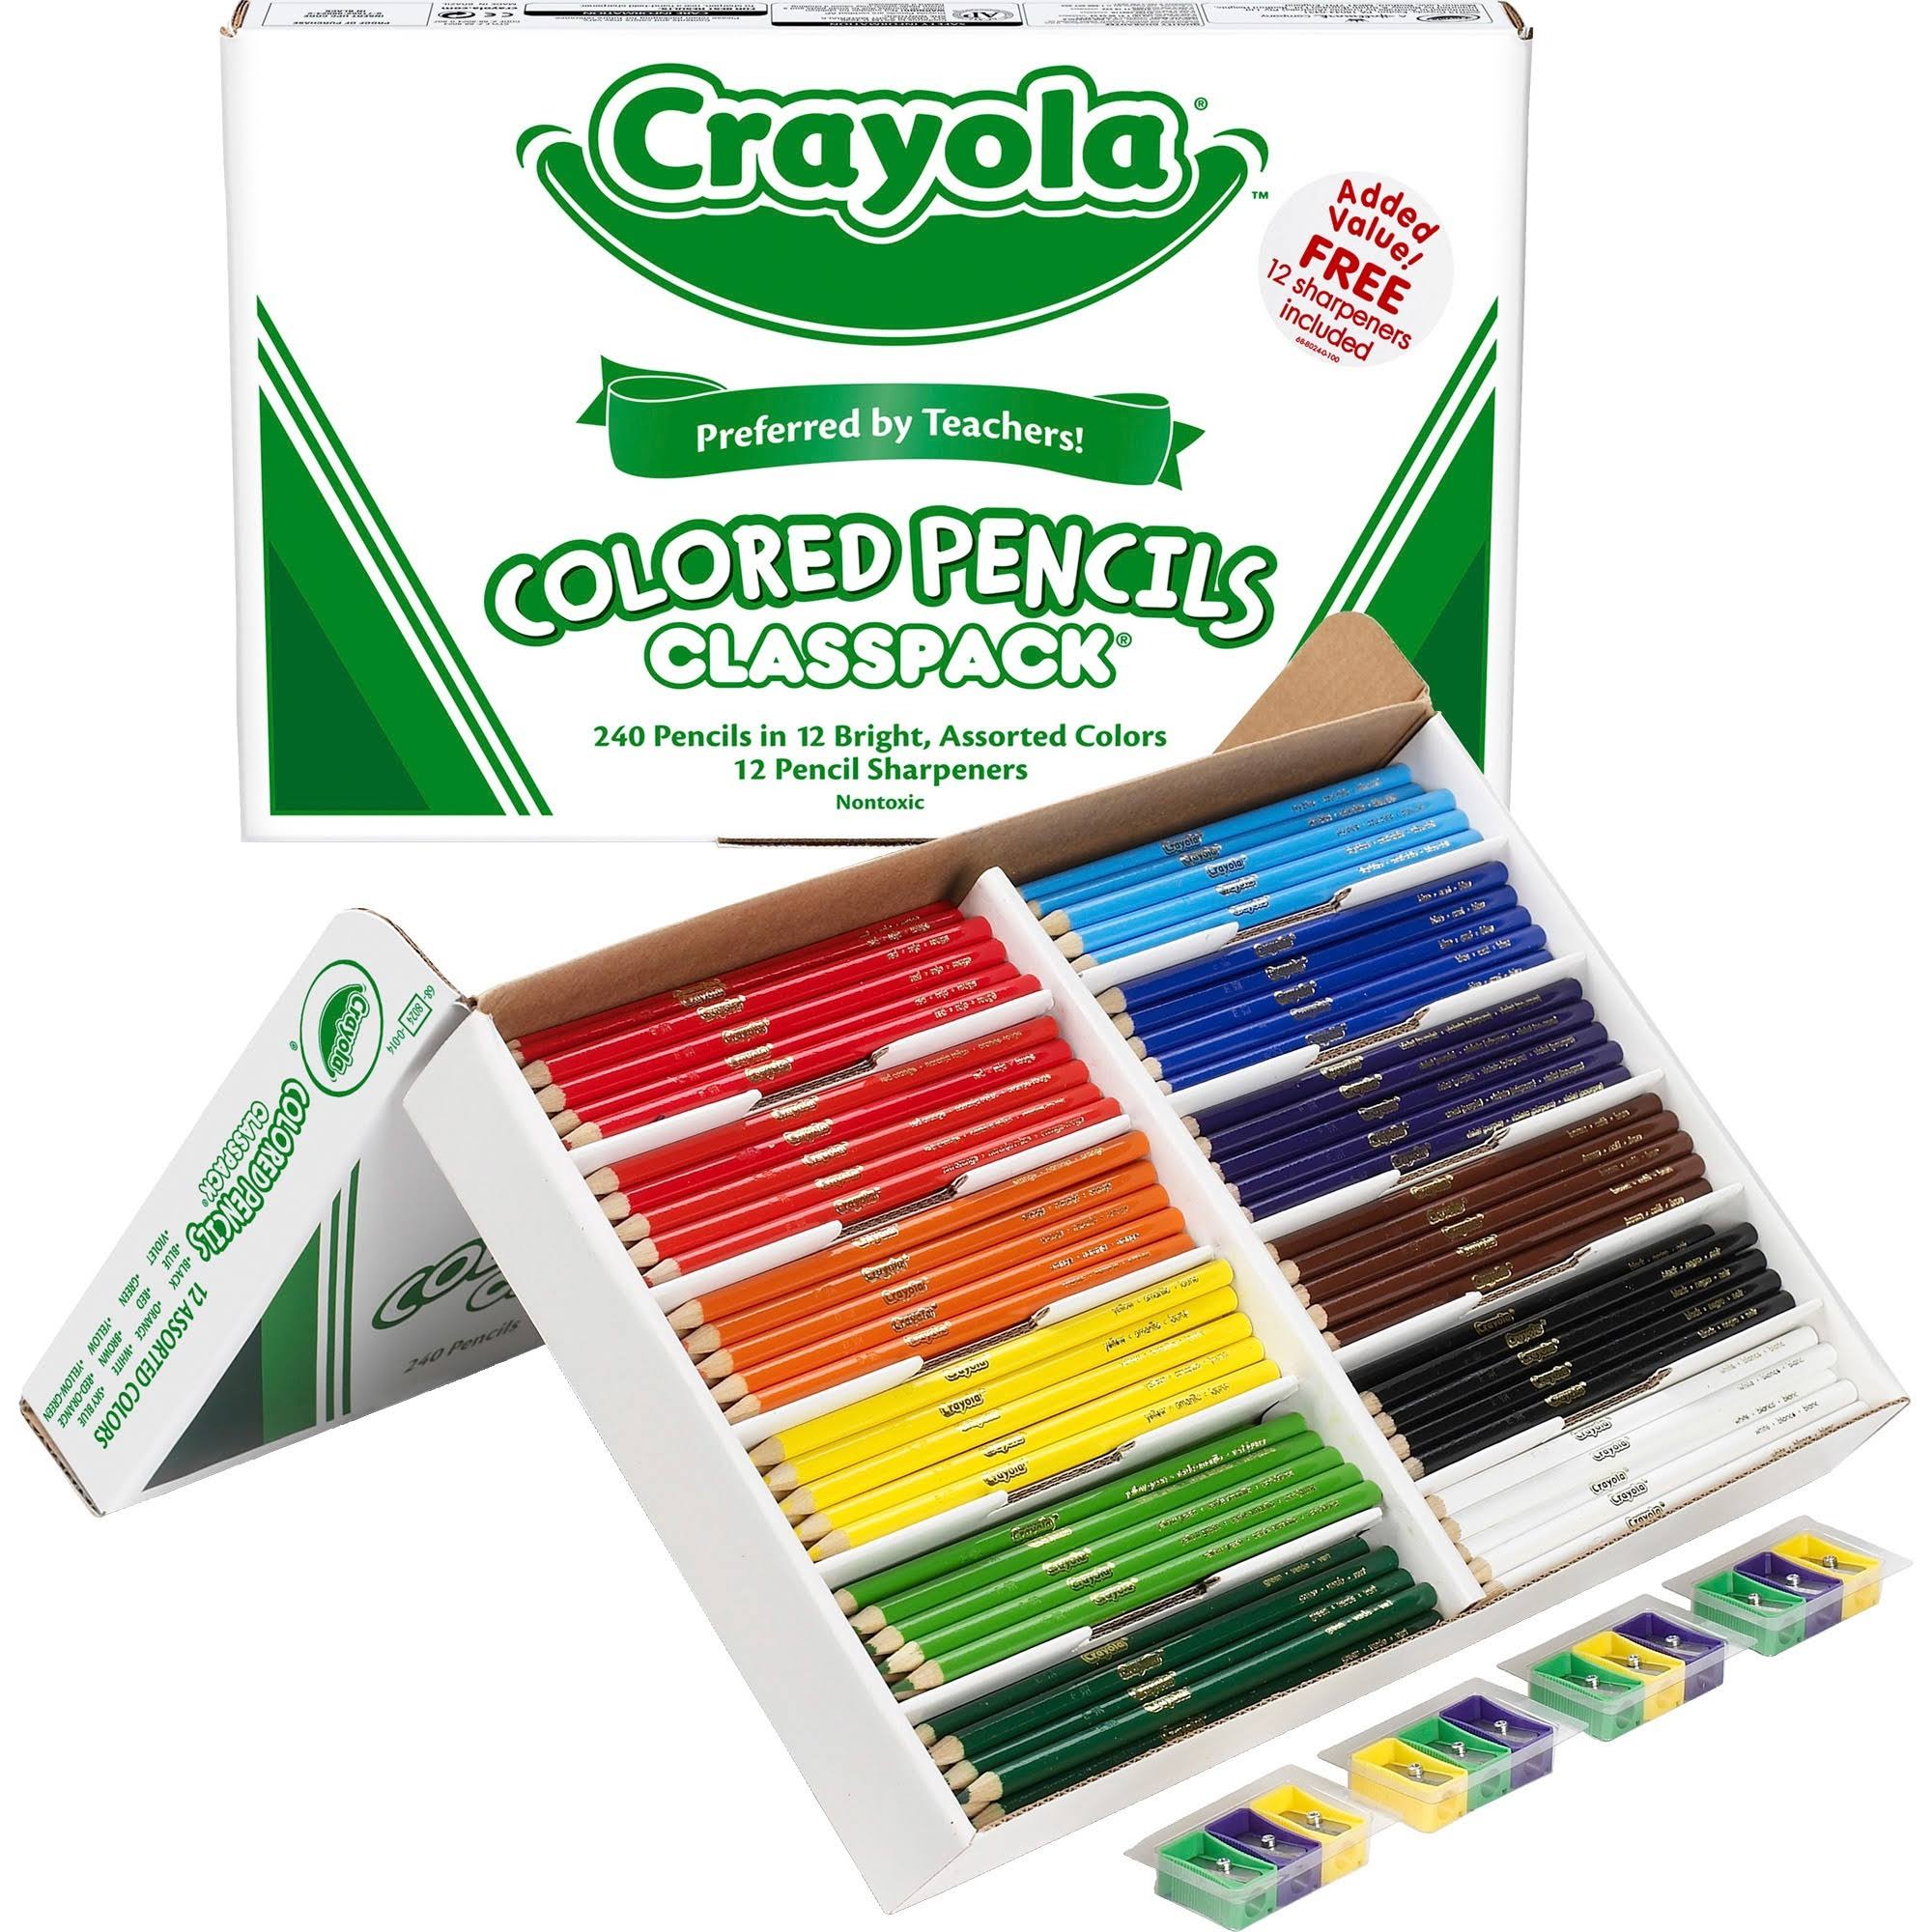 Crayola Classpack Colored Pencils - x240, 12 Assorted Colors